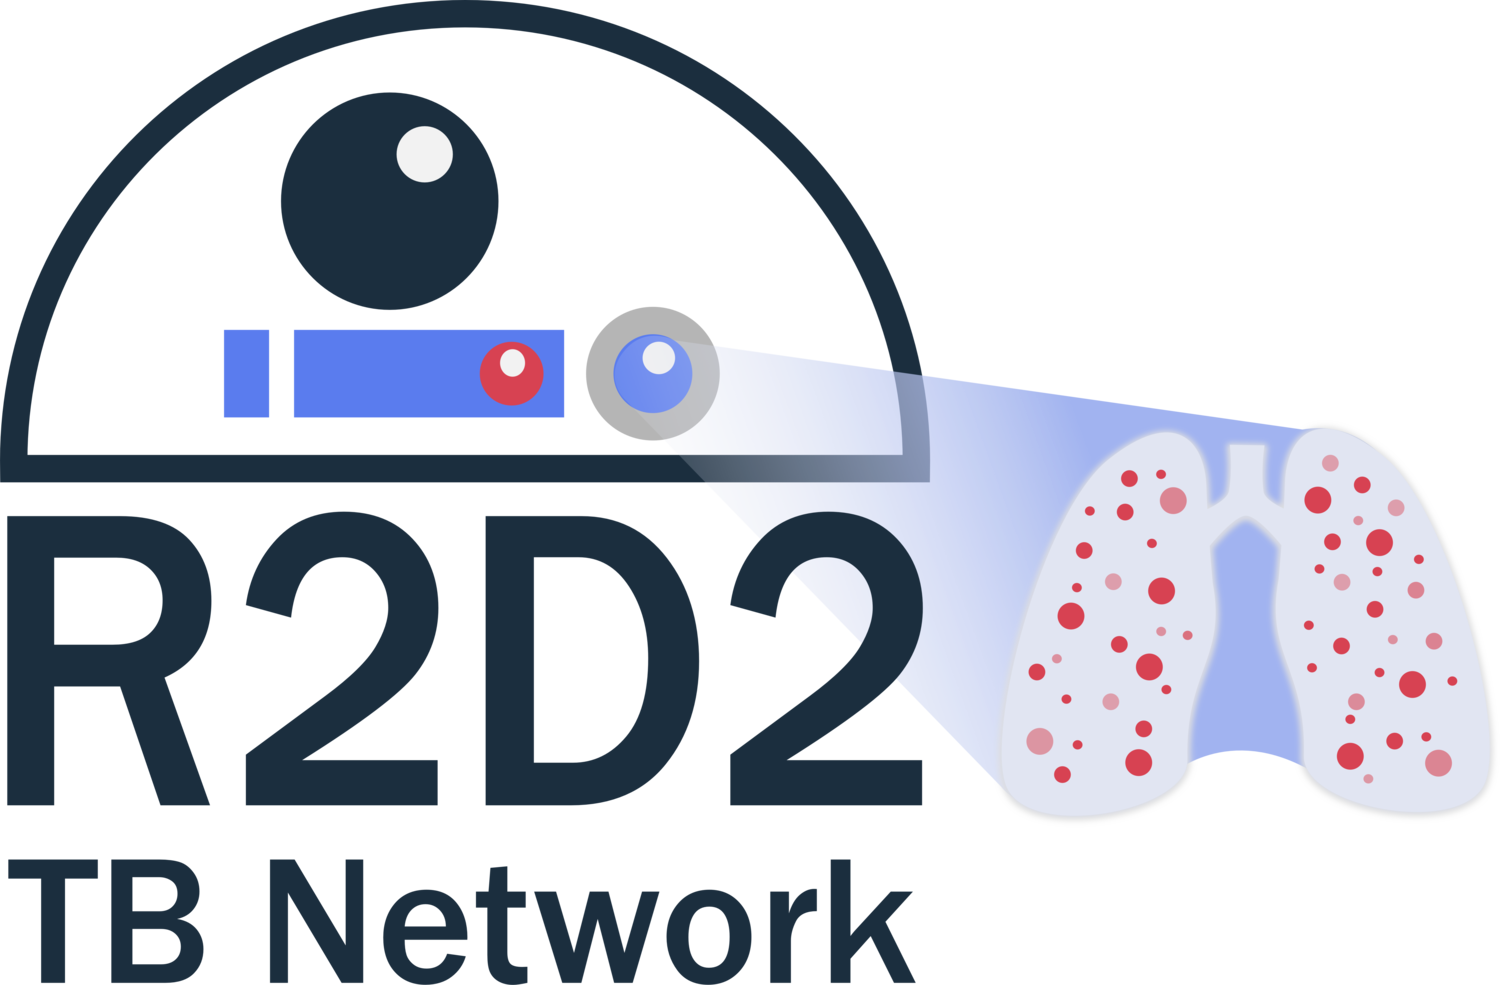 R2D2 TB Network